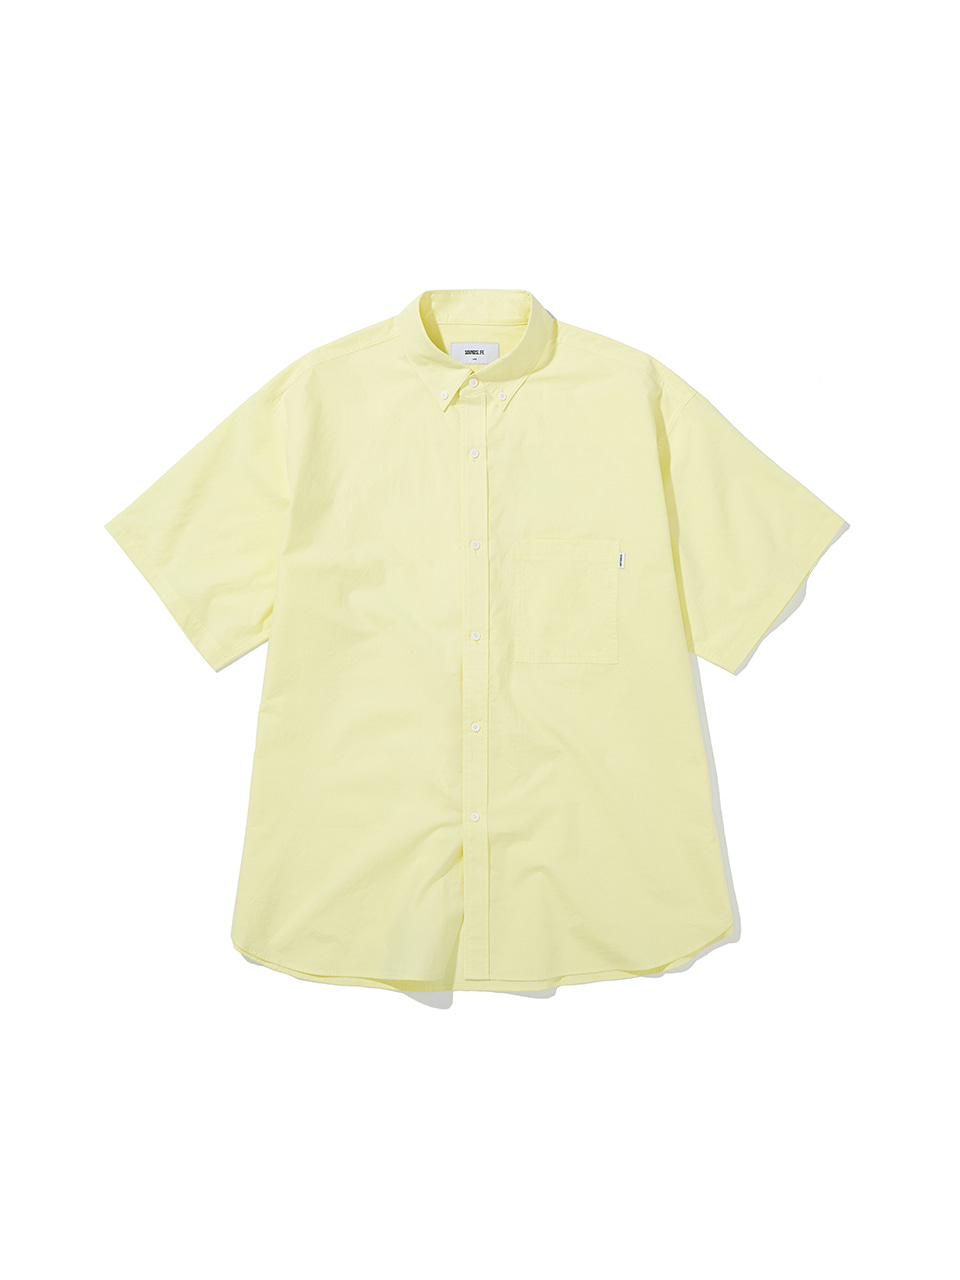 SOUNDSLIFE - Big Fit Short Sleeve Shirt Yellow